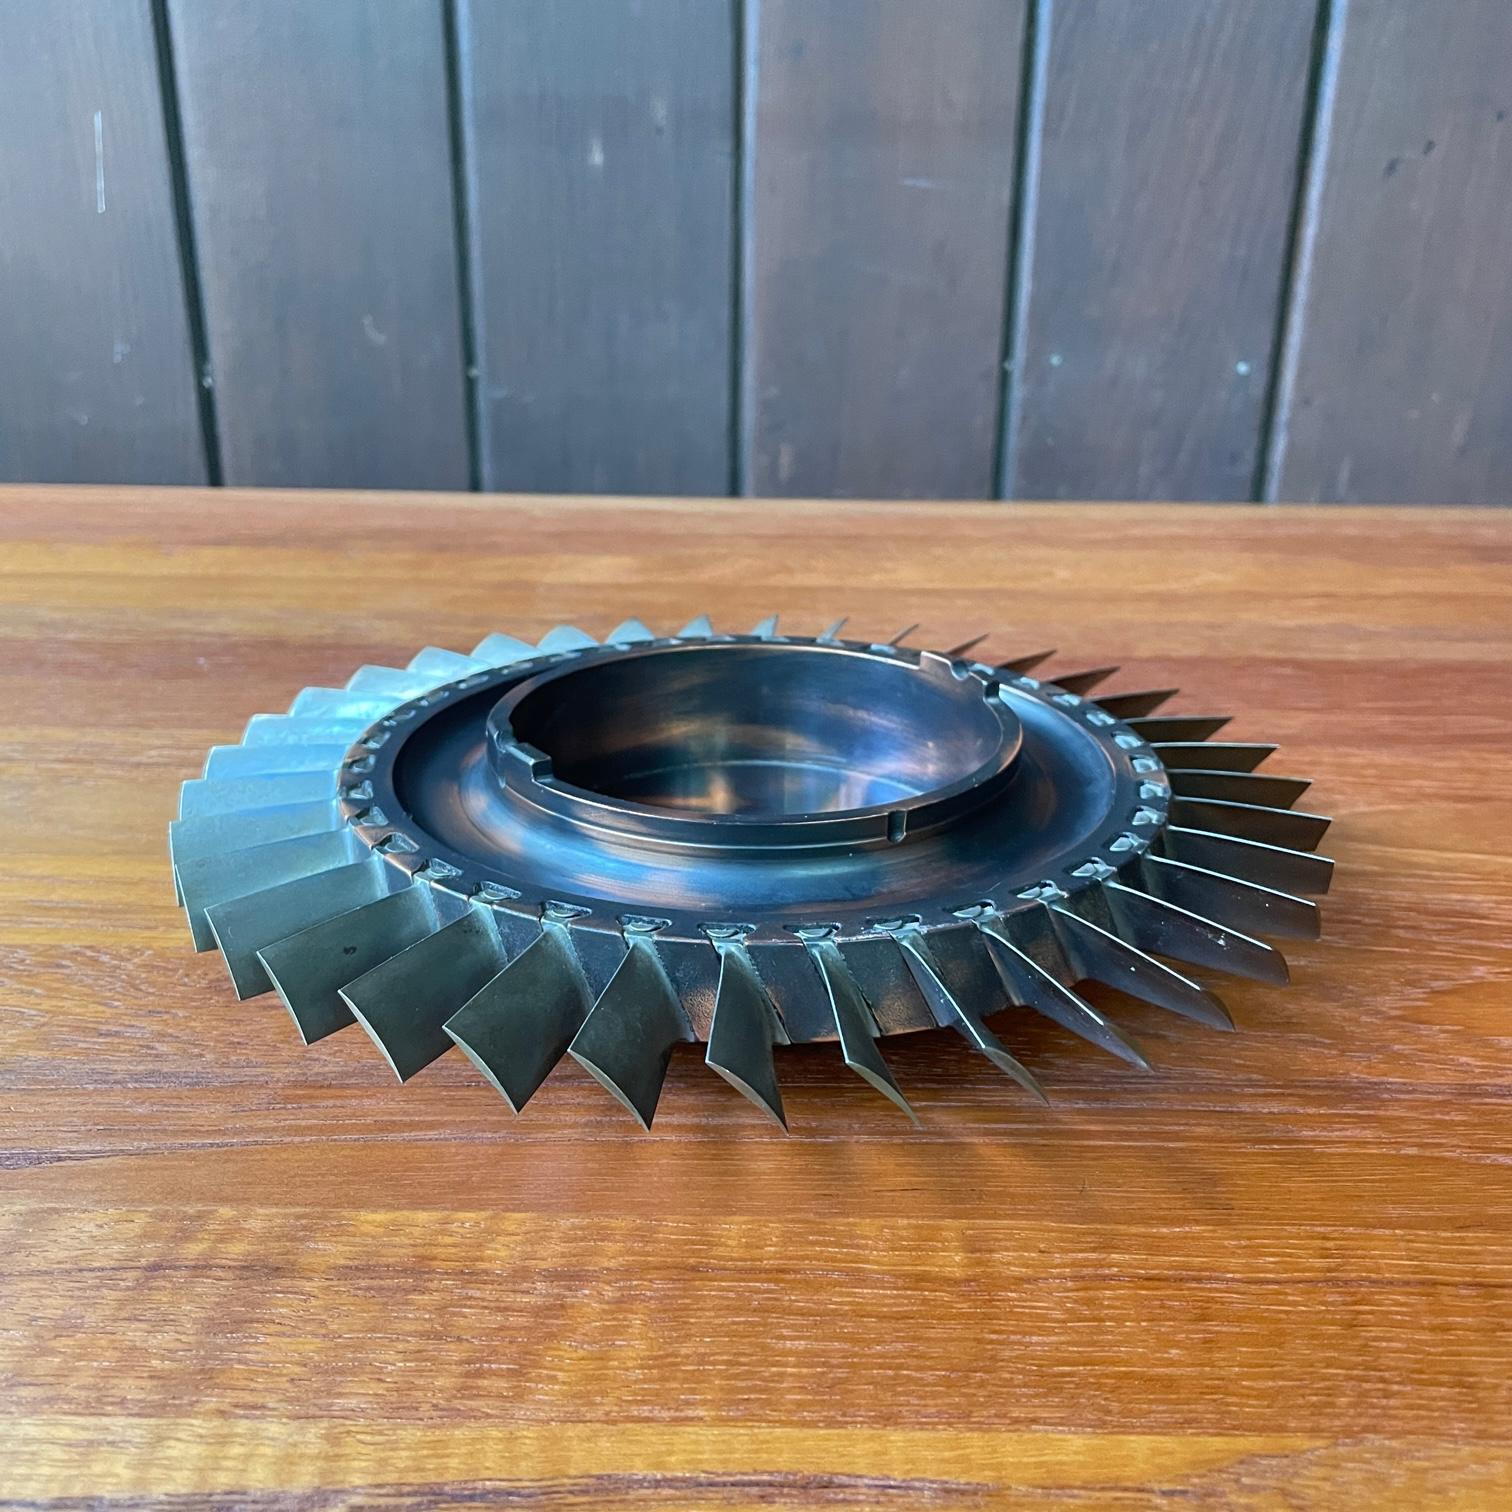 Cast Japanned Turbine Engine Dish Bowl Industrial Vintage Aviation Relic For Sale